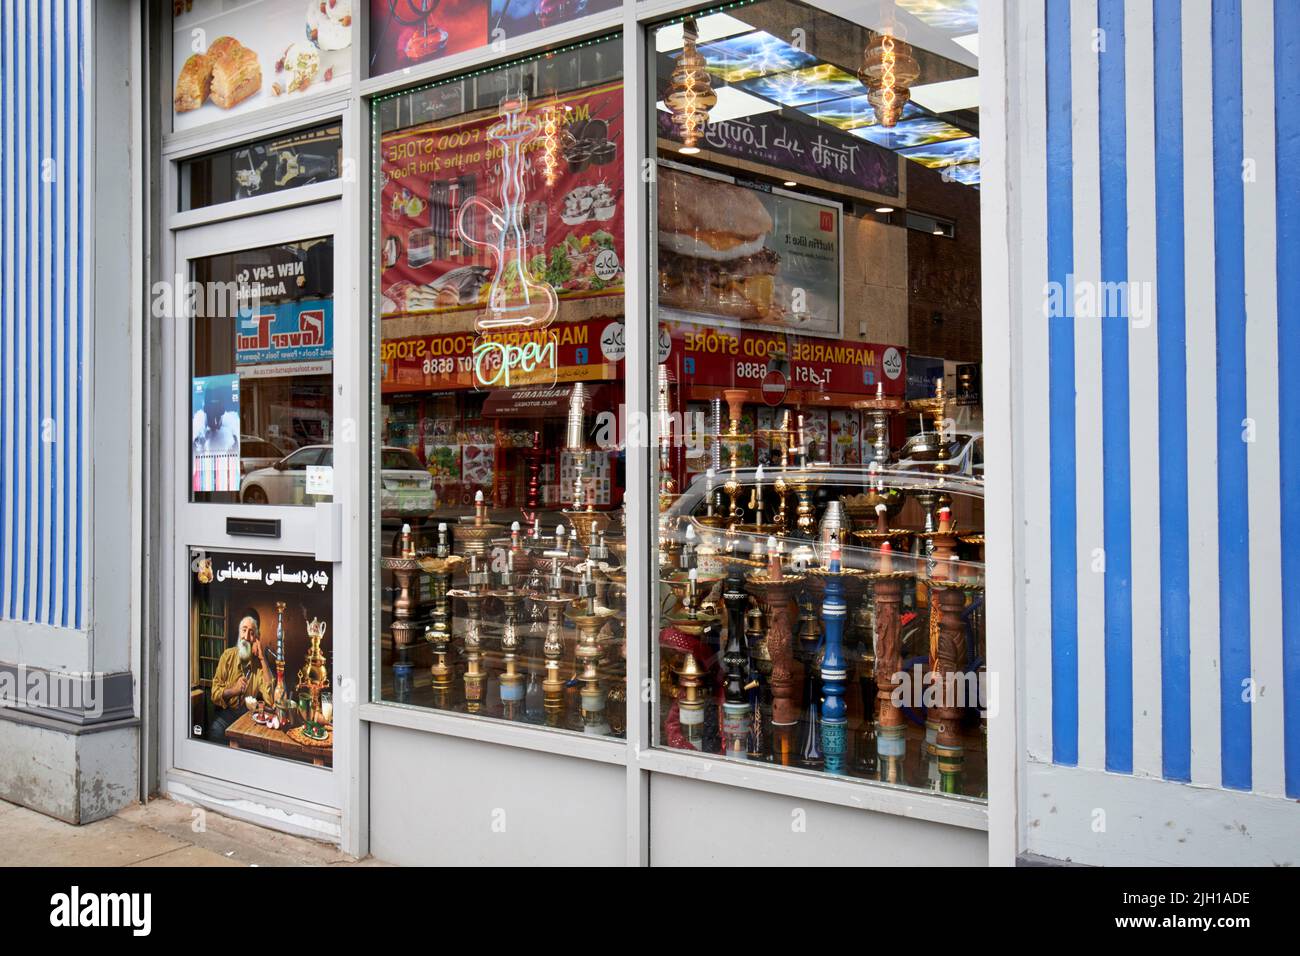 Immigrant Shisha Pfeife Smoking Shop london Road Liverpool England Großbritannien Stockfoto